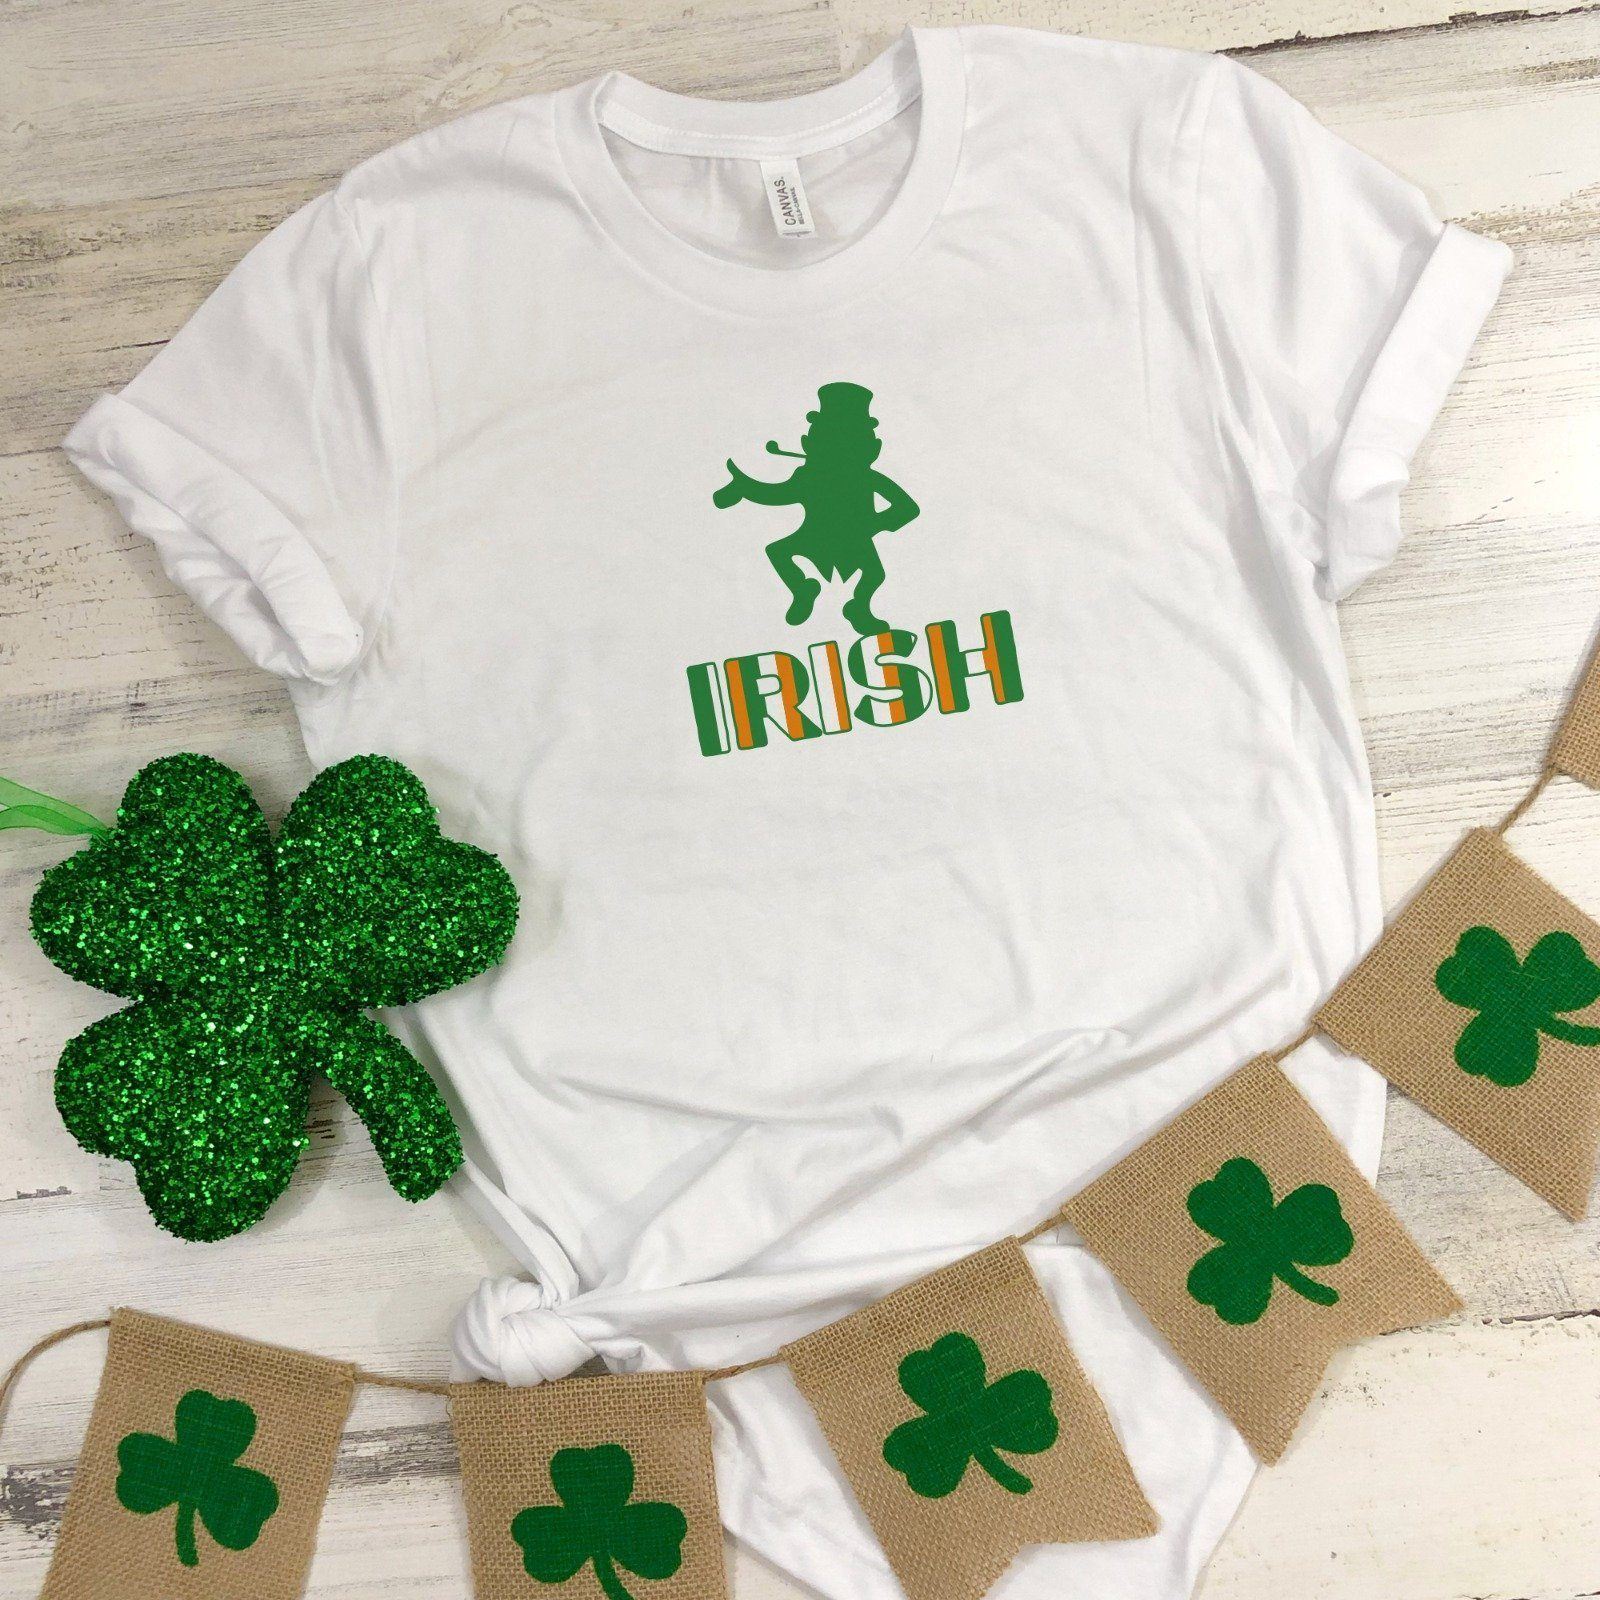 Irish T-shirt, Matching St Patricks Day shirt, Irish flag themed, Paddy's Day outfit